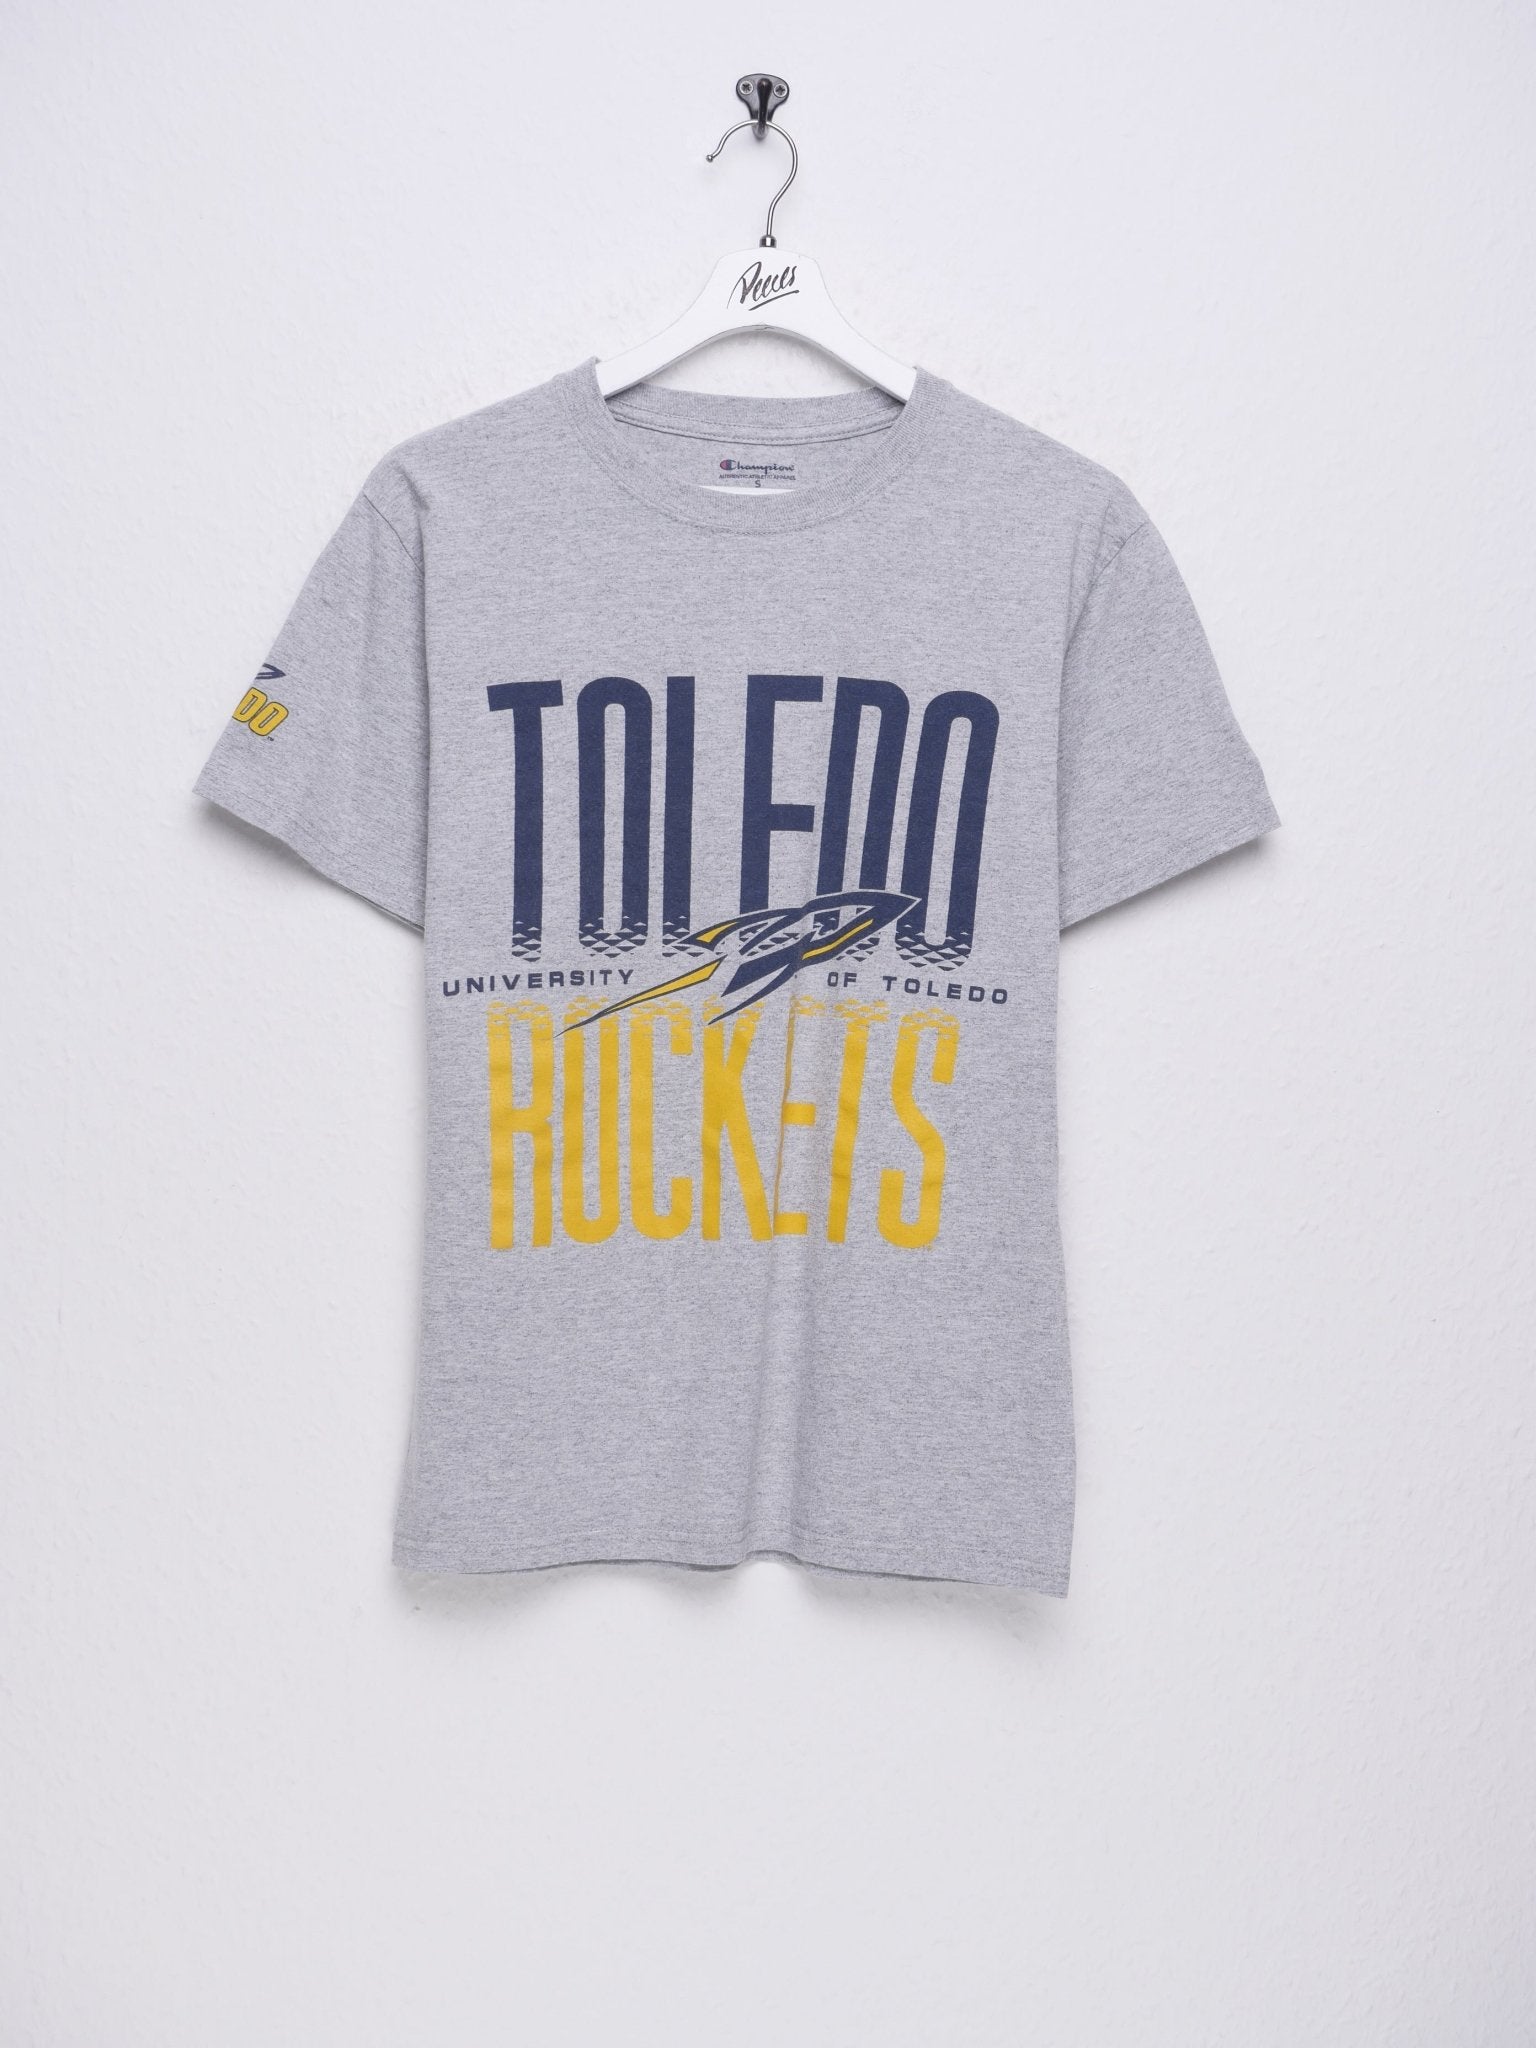 Champion University of Toledo embroidered Logo Shirt - Peeces